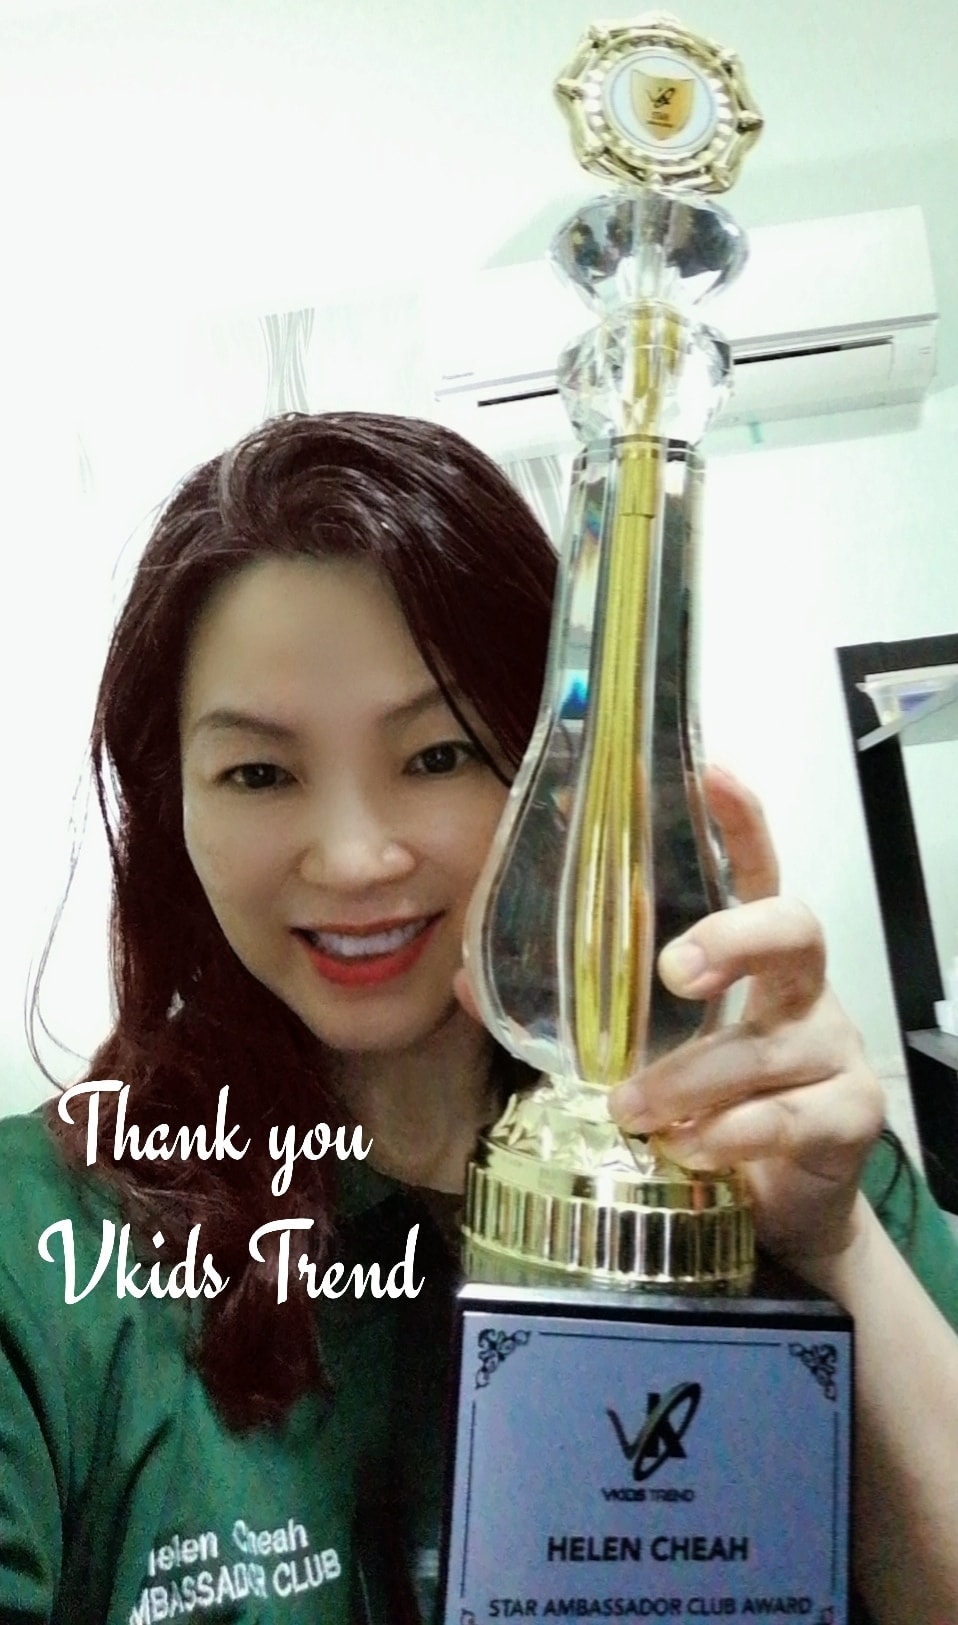 Helen Cheah Achieving Her Star Ambassador Award from Vkids Trend 